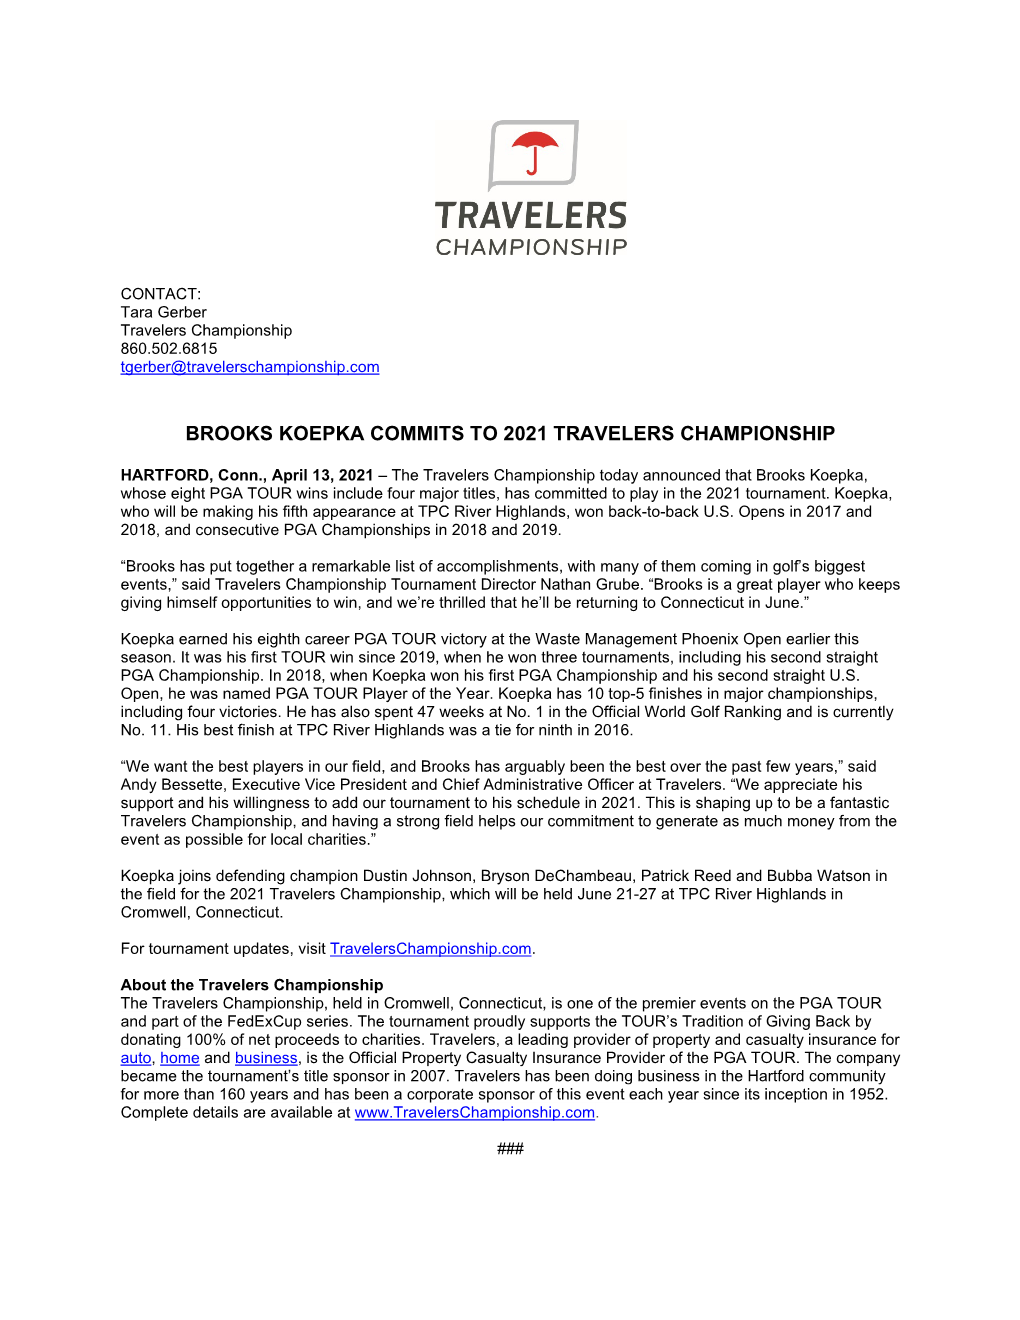 Brooks Koepka Commits to 2021 Travelers Championship